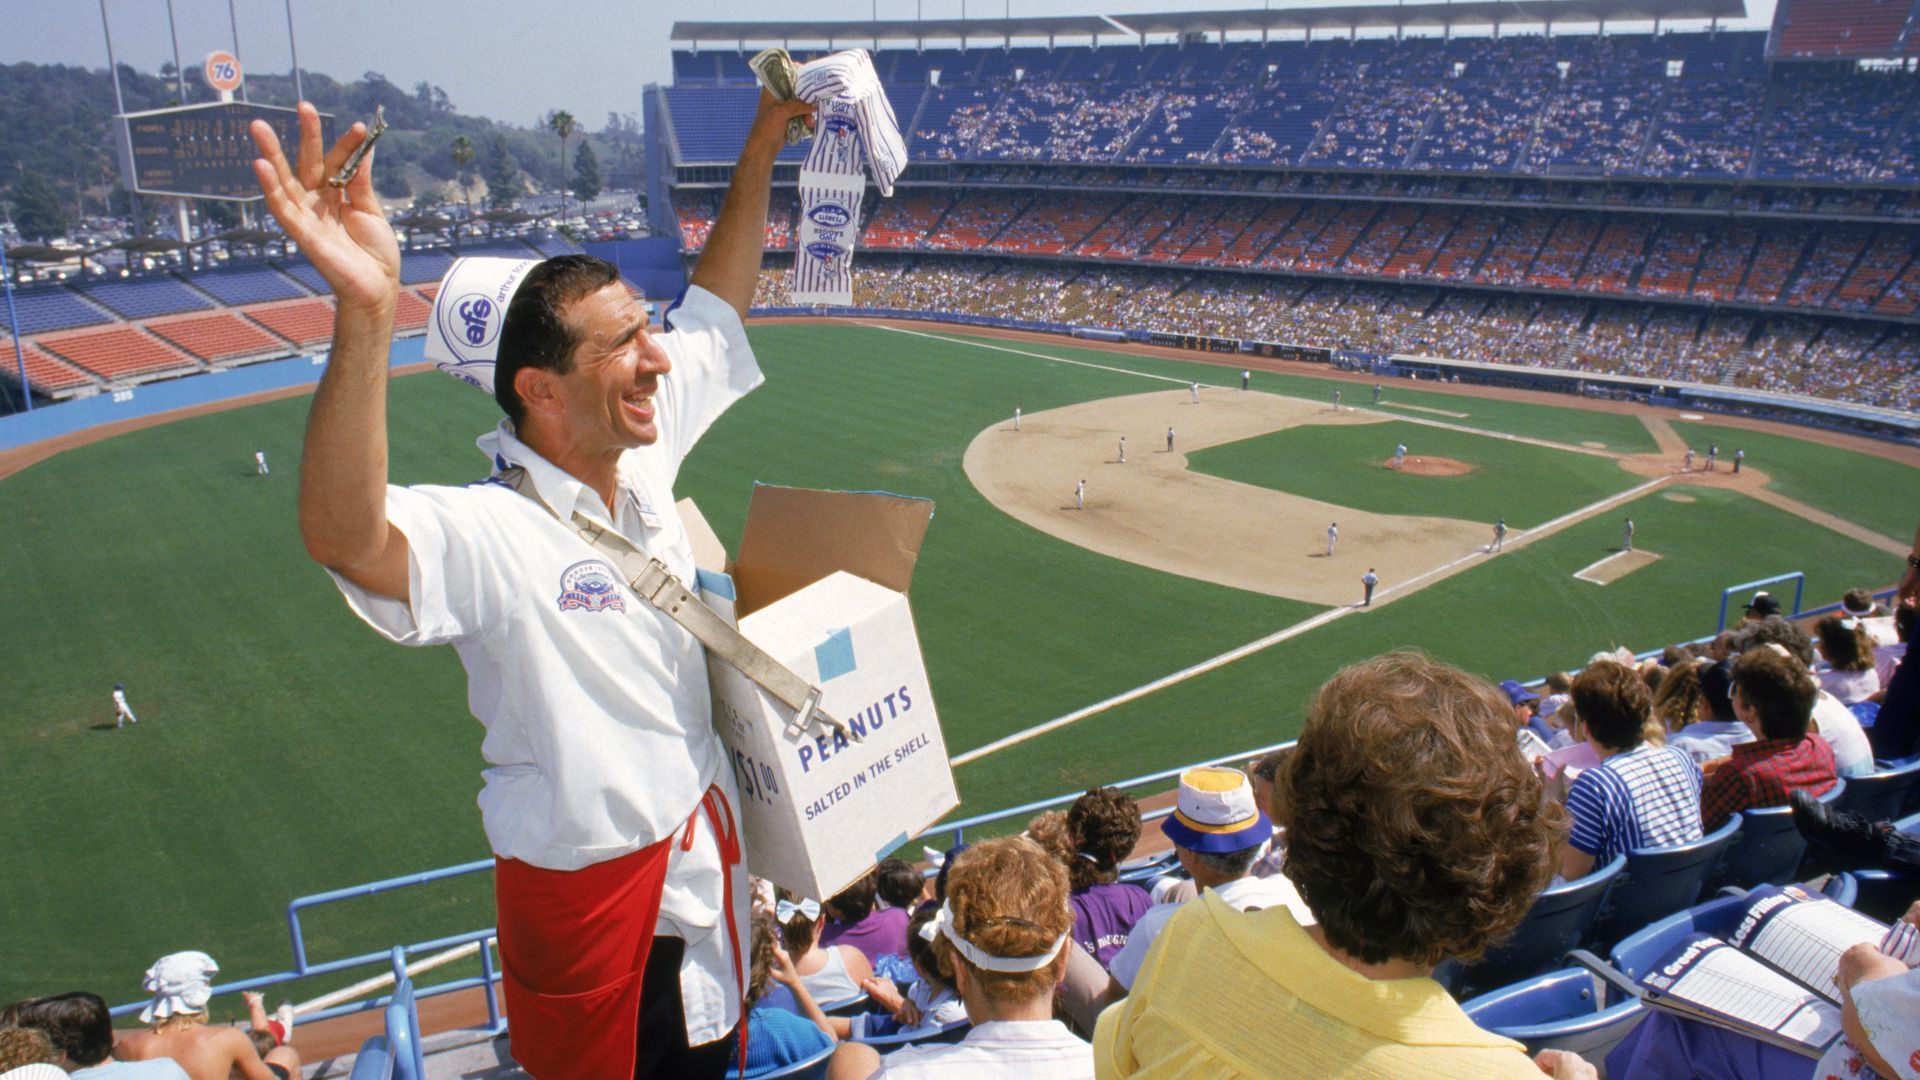 A man delivering peanuts at a baseball game.